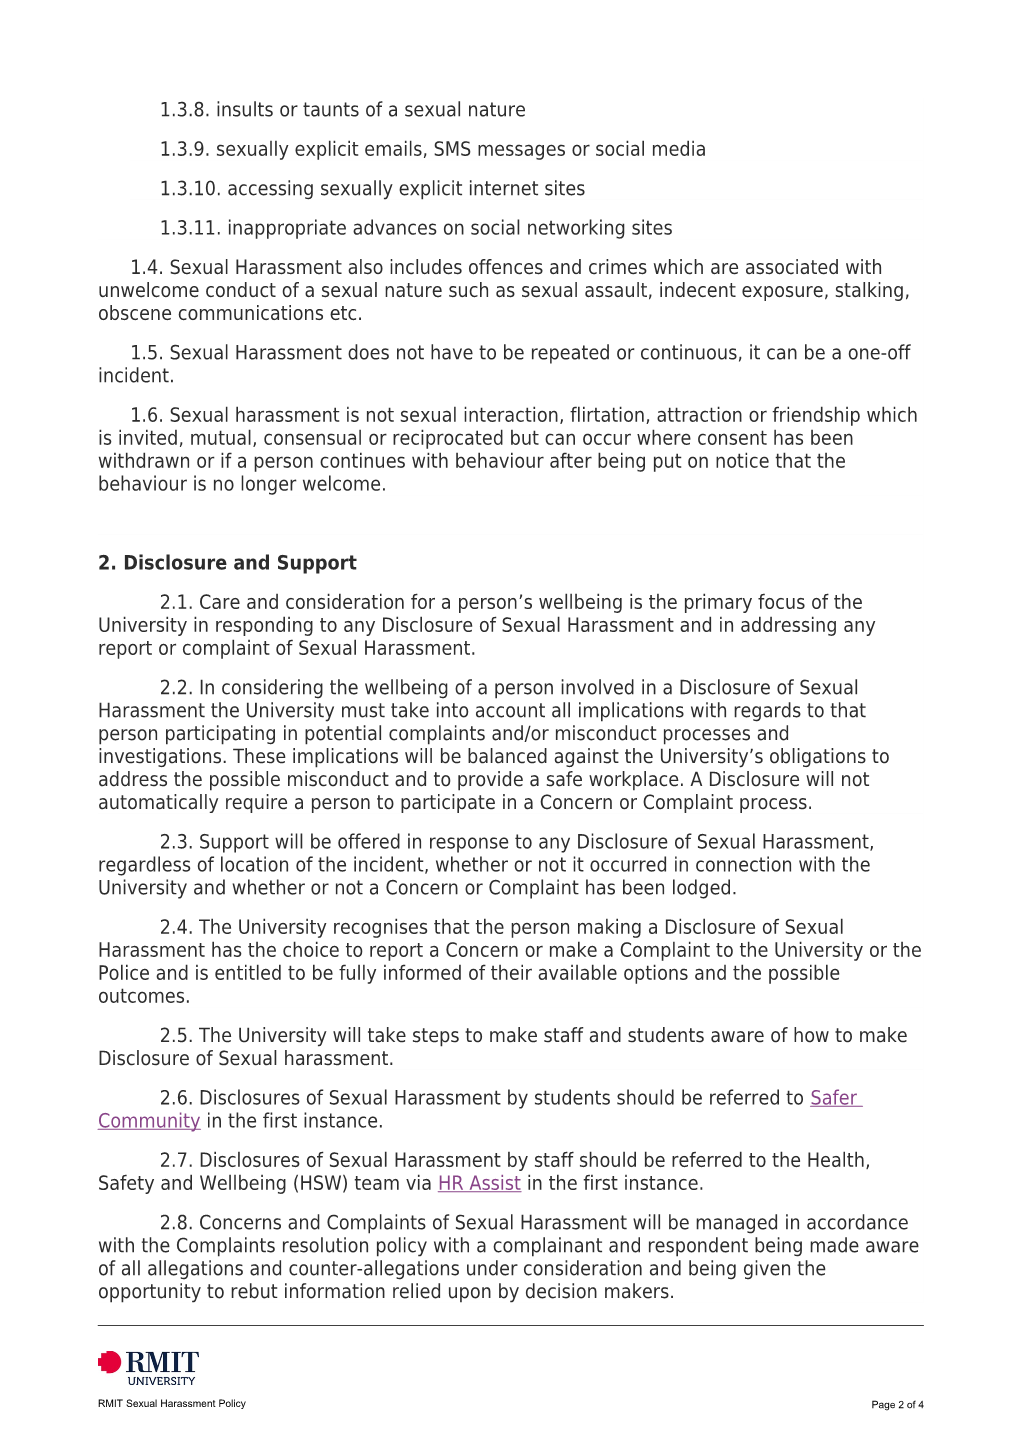 Appendix 2 RMIT Sexual Harassment Policy